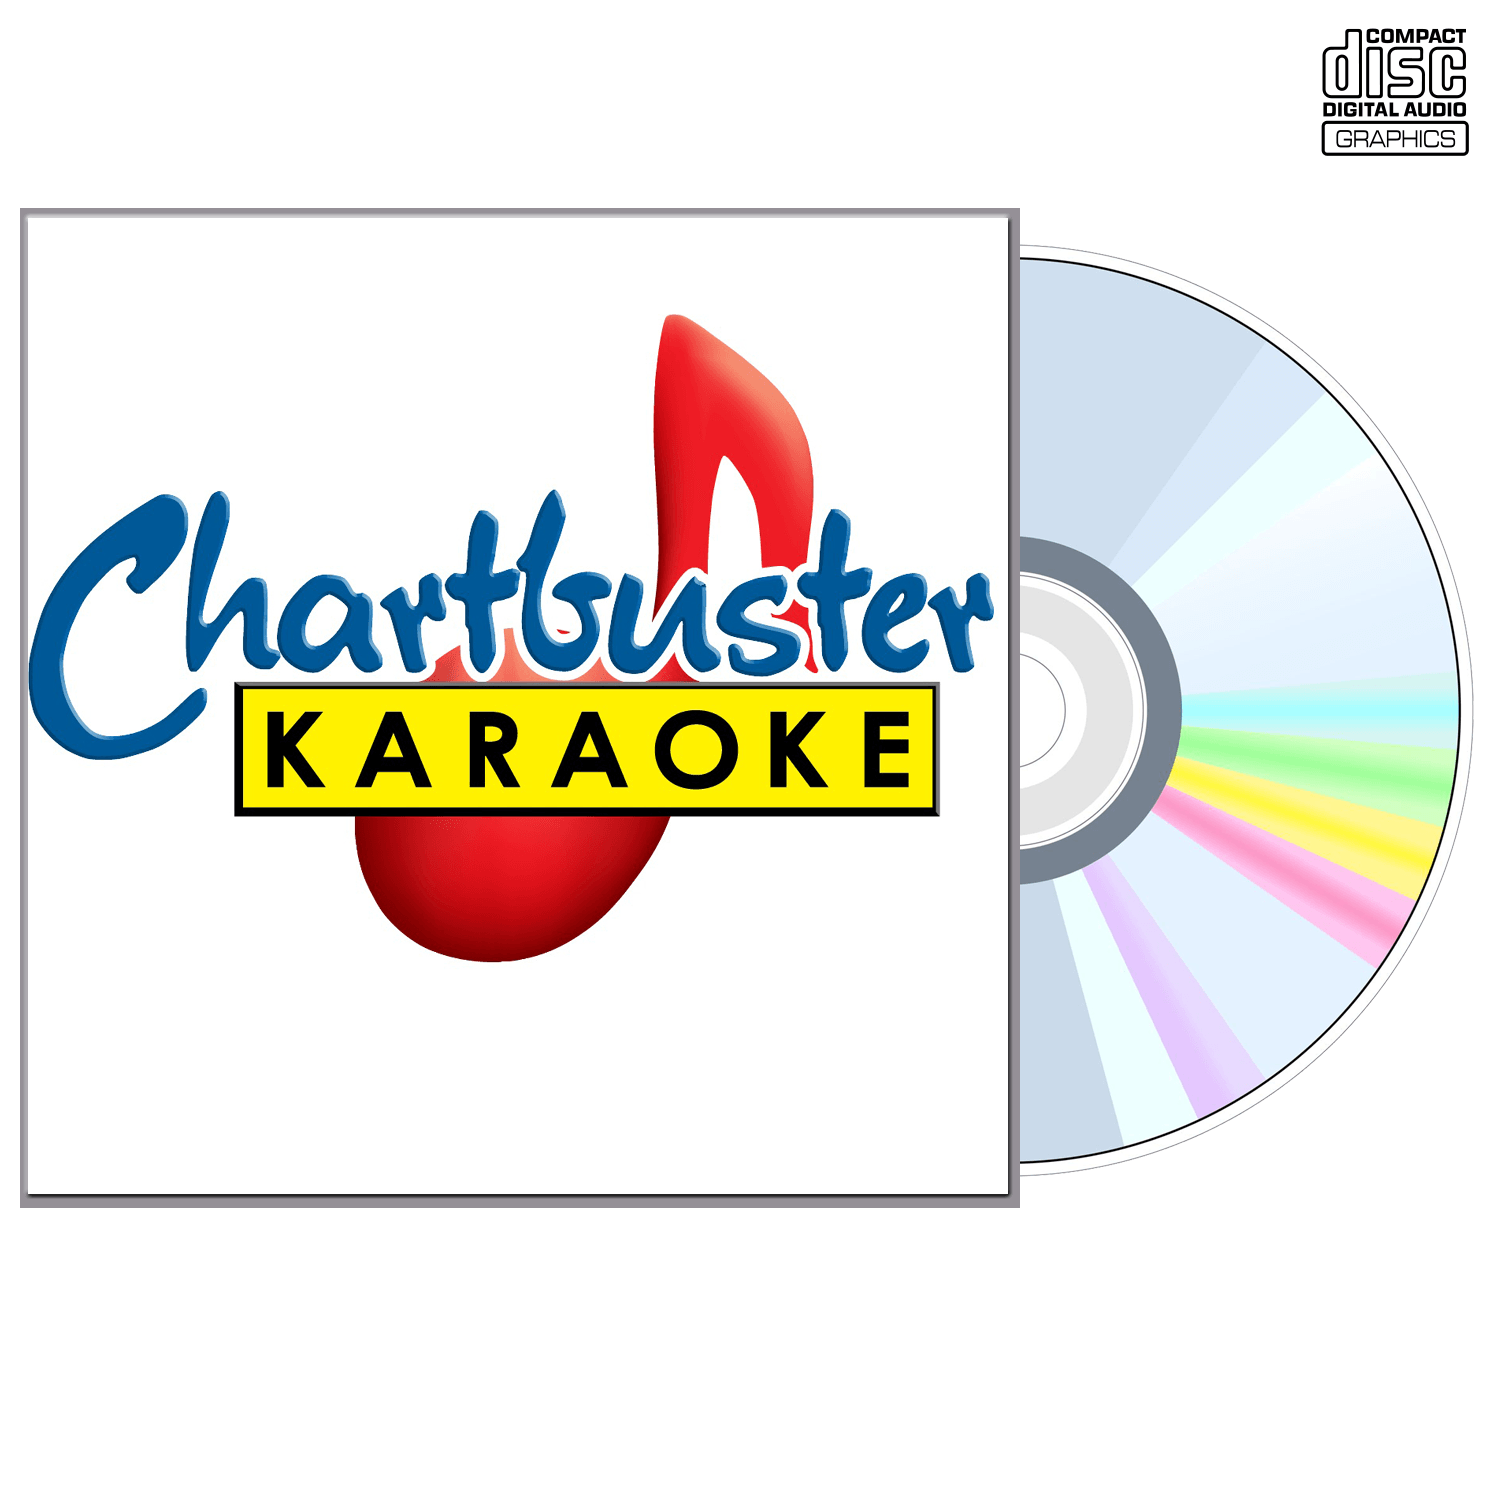 Collin Raye Vol 1 - CD+G - Chartbuster Karaoke - Karaoke Home Entertainment